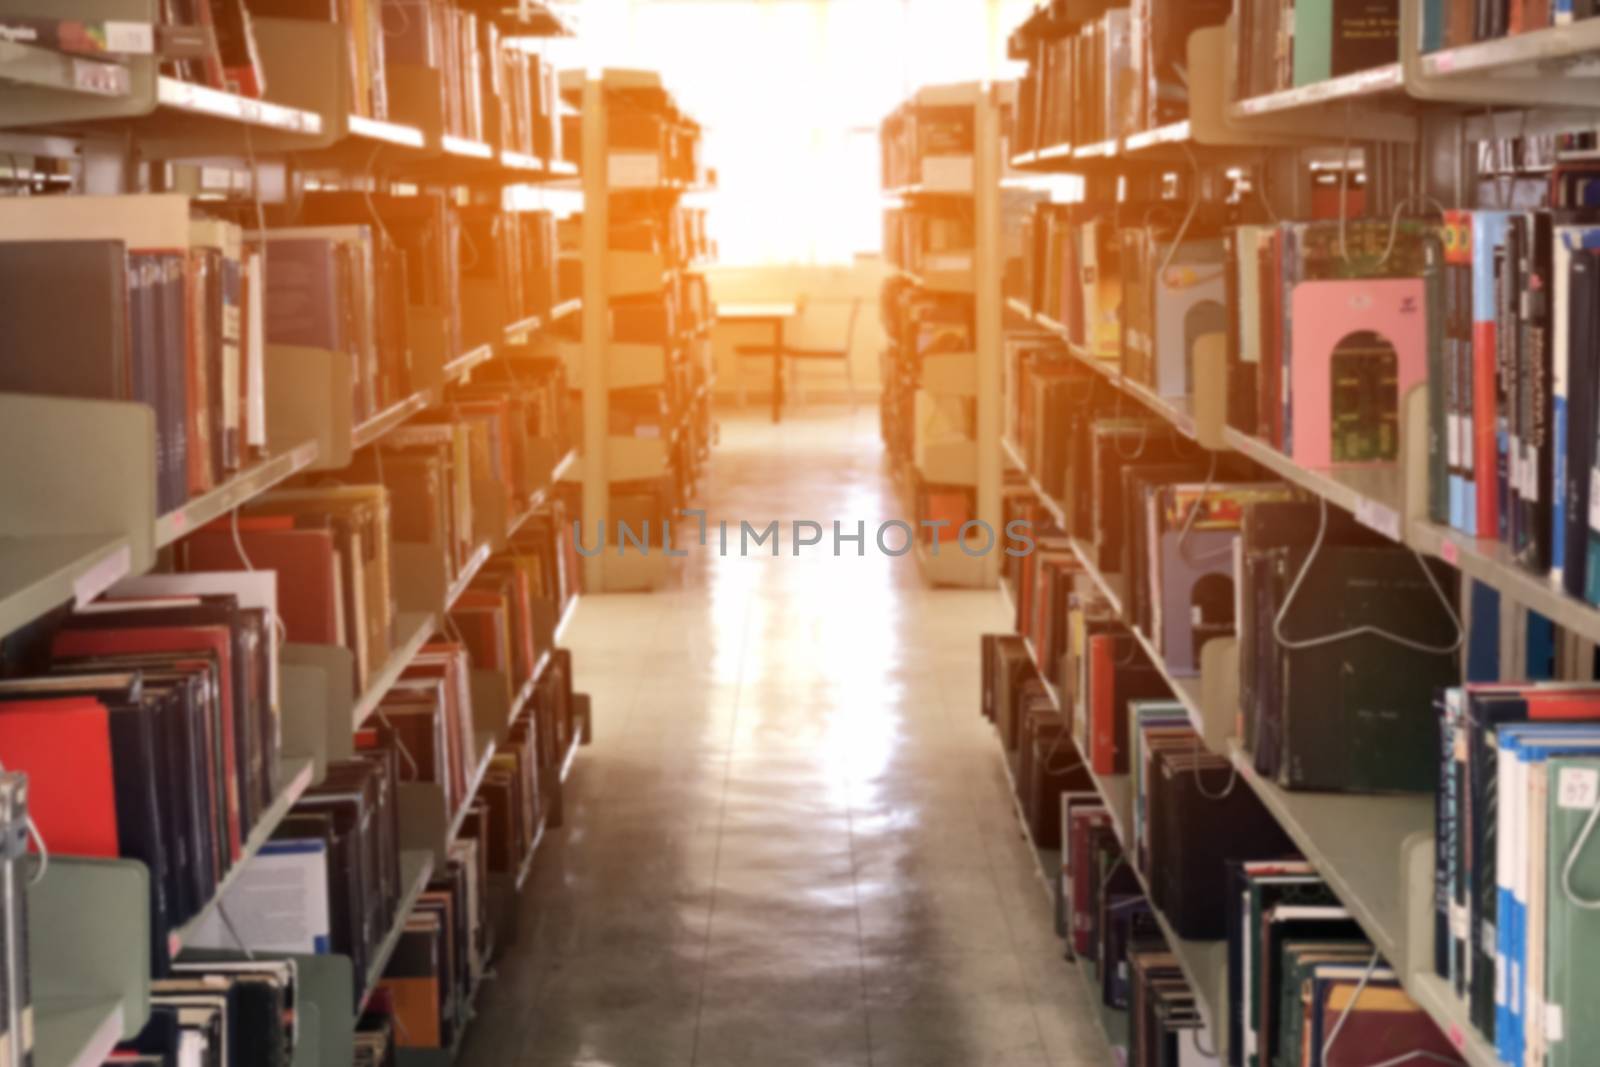 Bookshelf in public library. Blur effect. Background. by Surasak